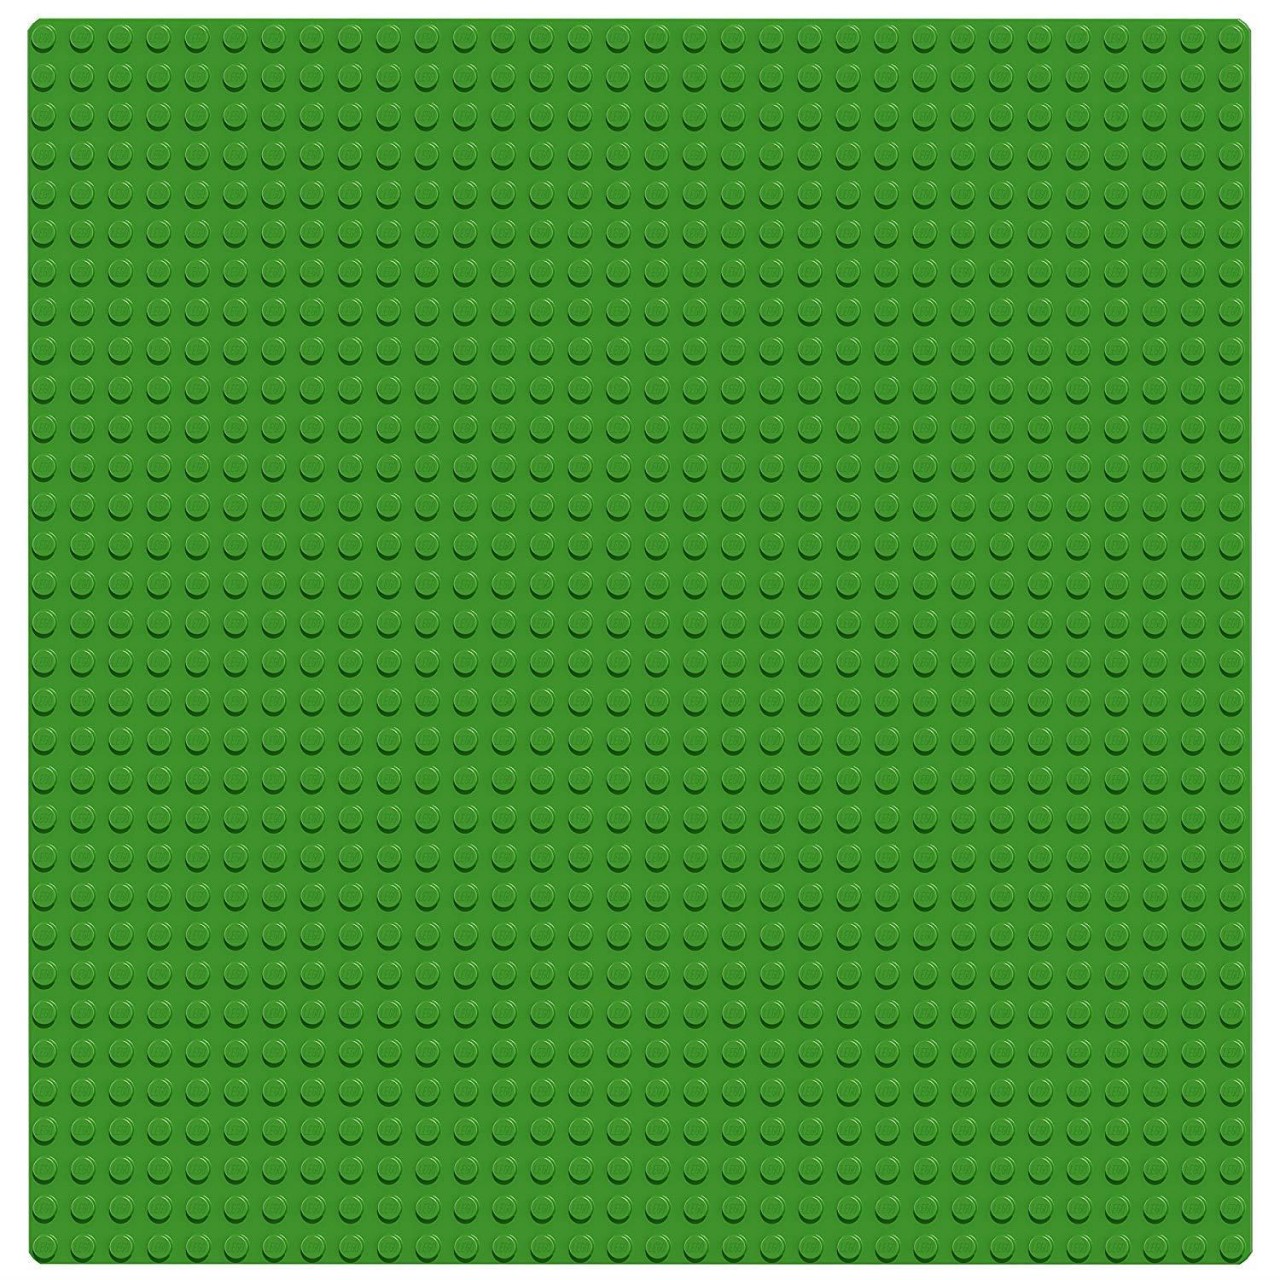 LEGO CLASSIC 10700 Grüne Bauplatte